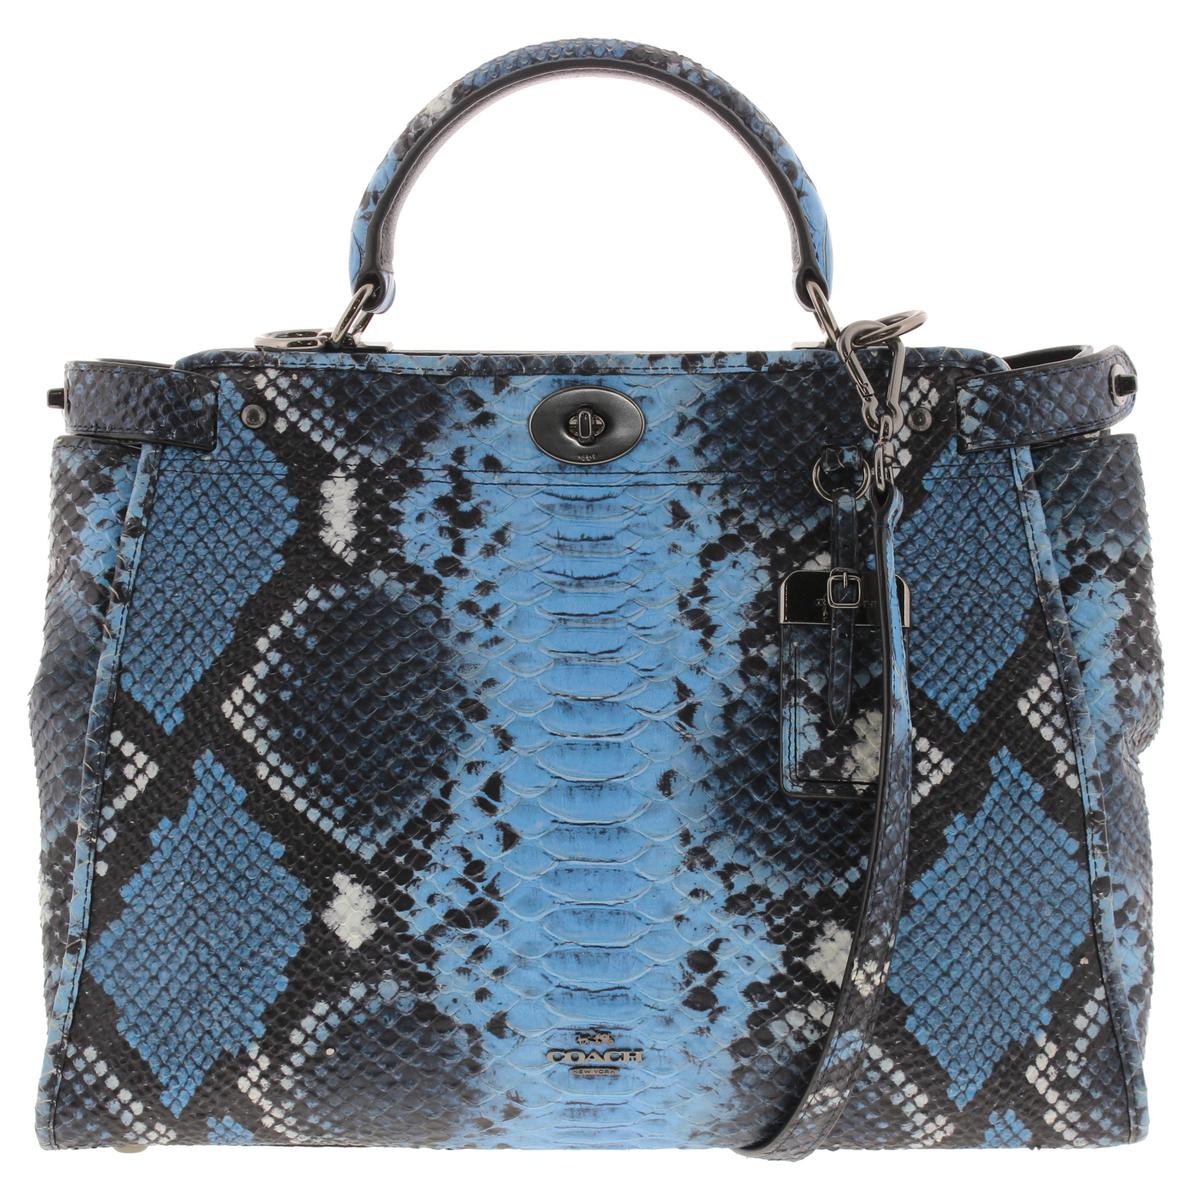 Coach 5019 Womens Gramercy Blue Leather Python Satchel Handbag Purse ...